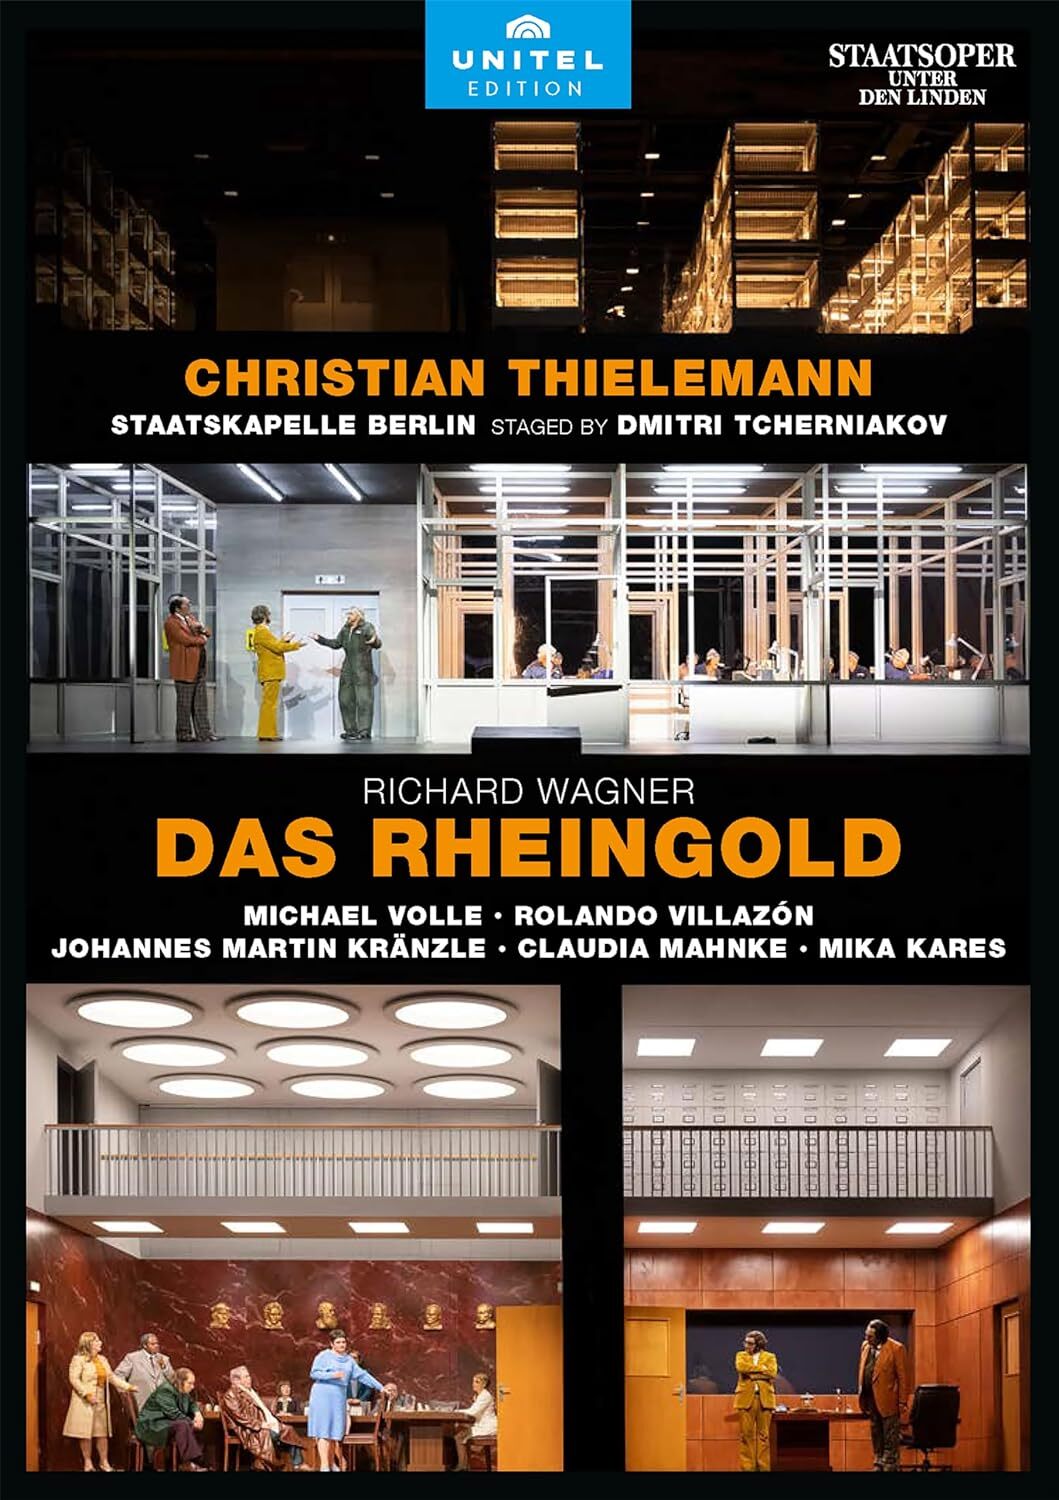 Richard Wagner: Das Rheingold DVD (Staatsoper Unter den Linden